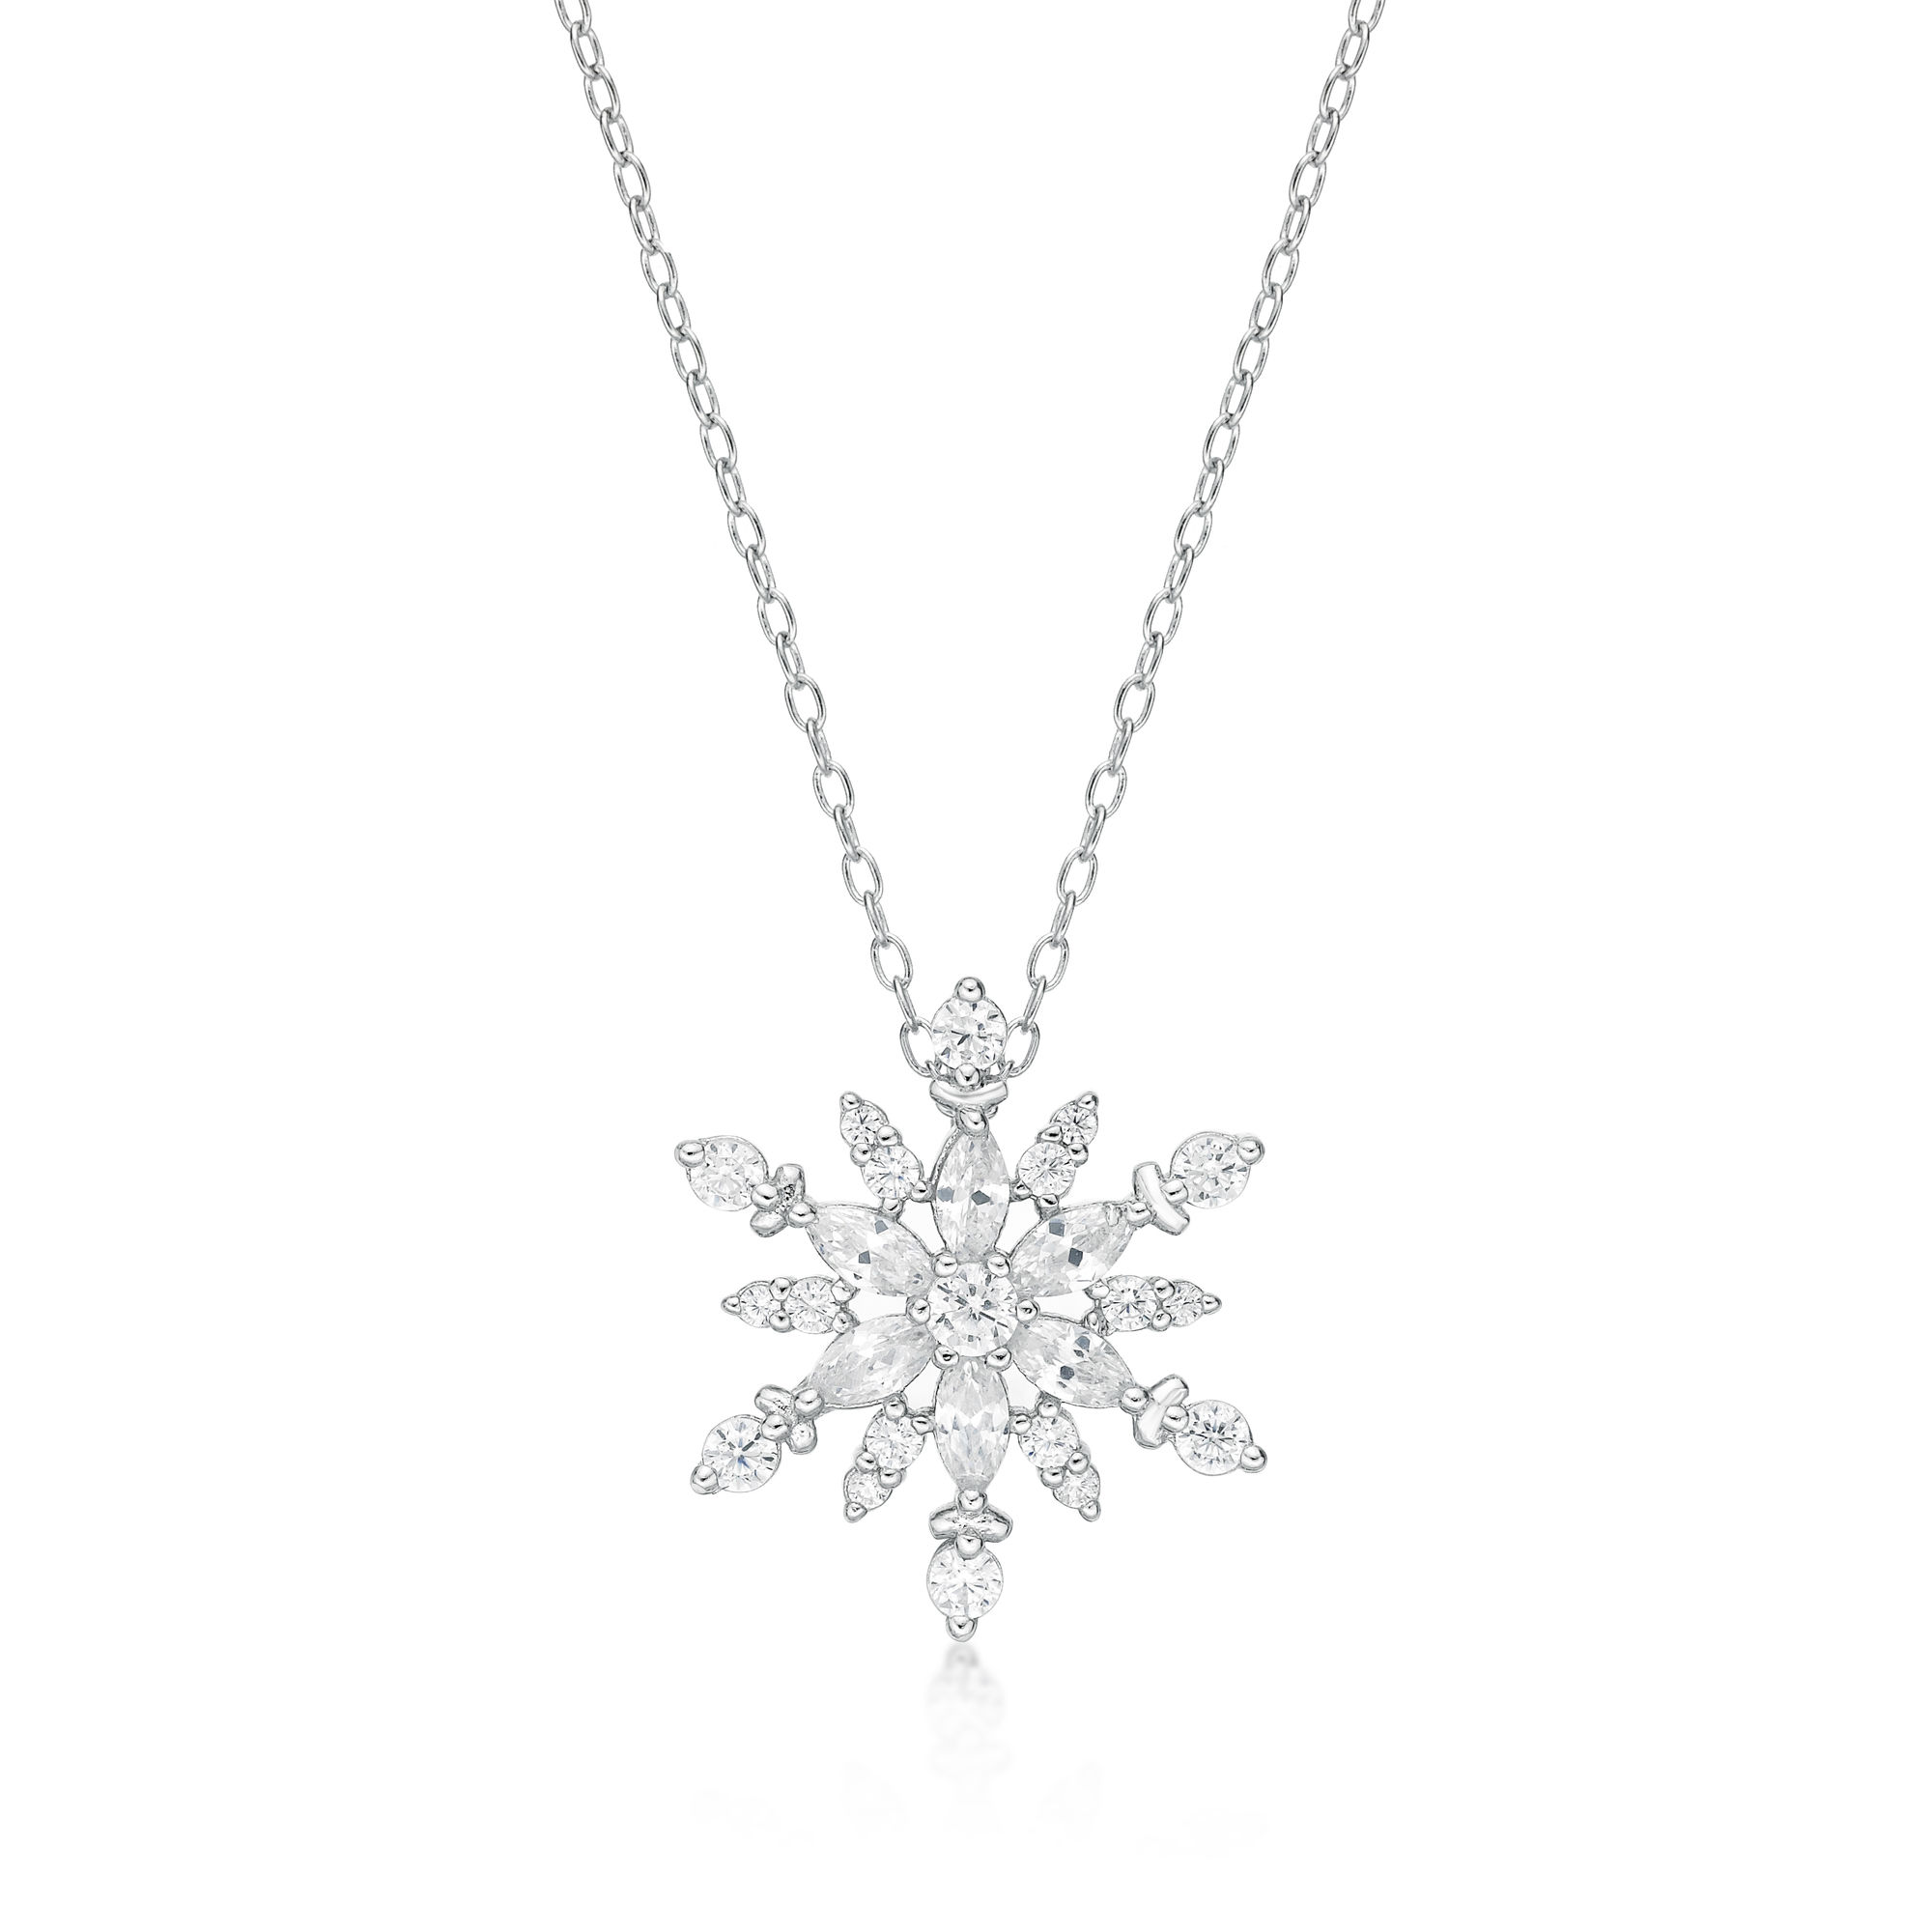 44426-pendant-fashion-jewelry-sterling-silver-cubic-zirconia-round-1mm-44426-4.jpg